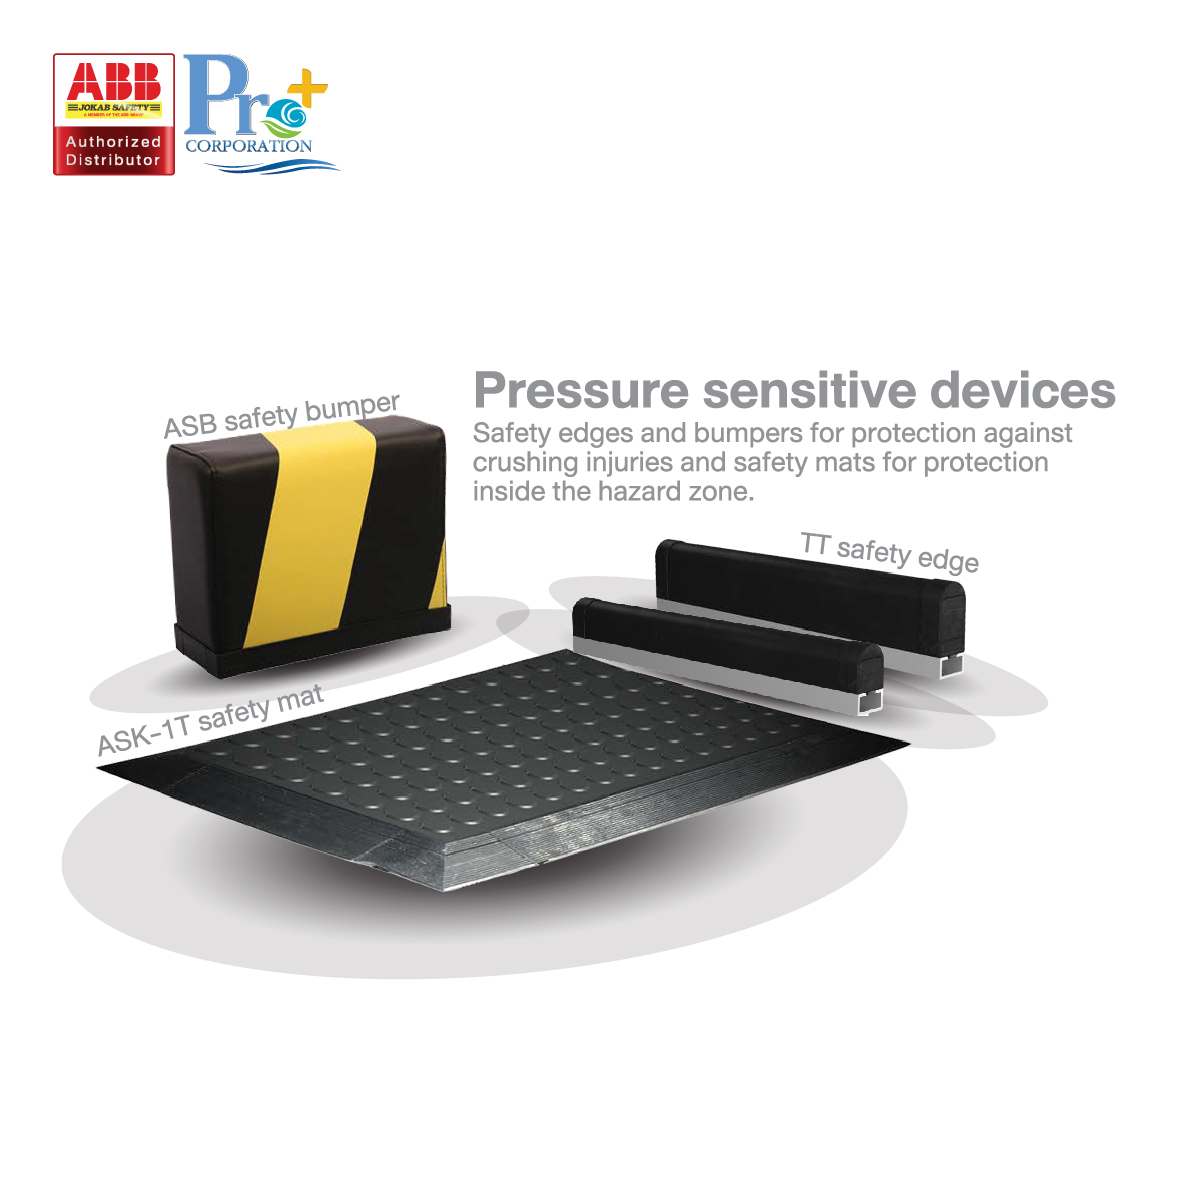 Pressure sensitive devices